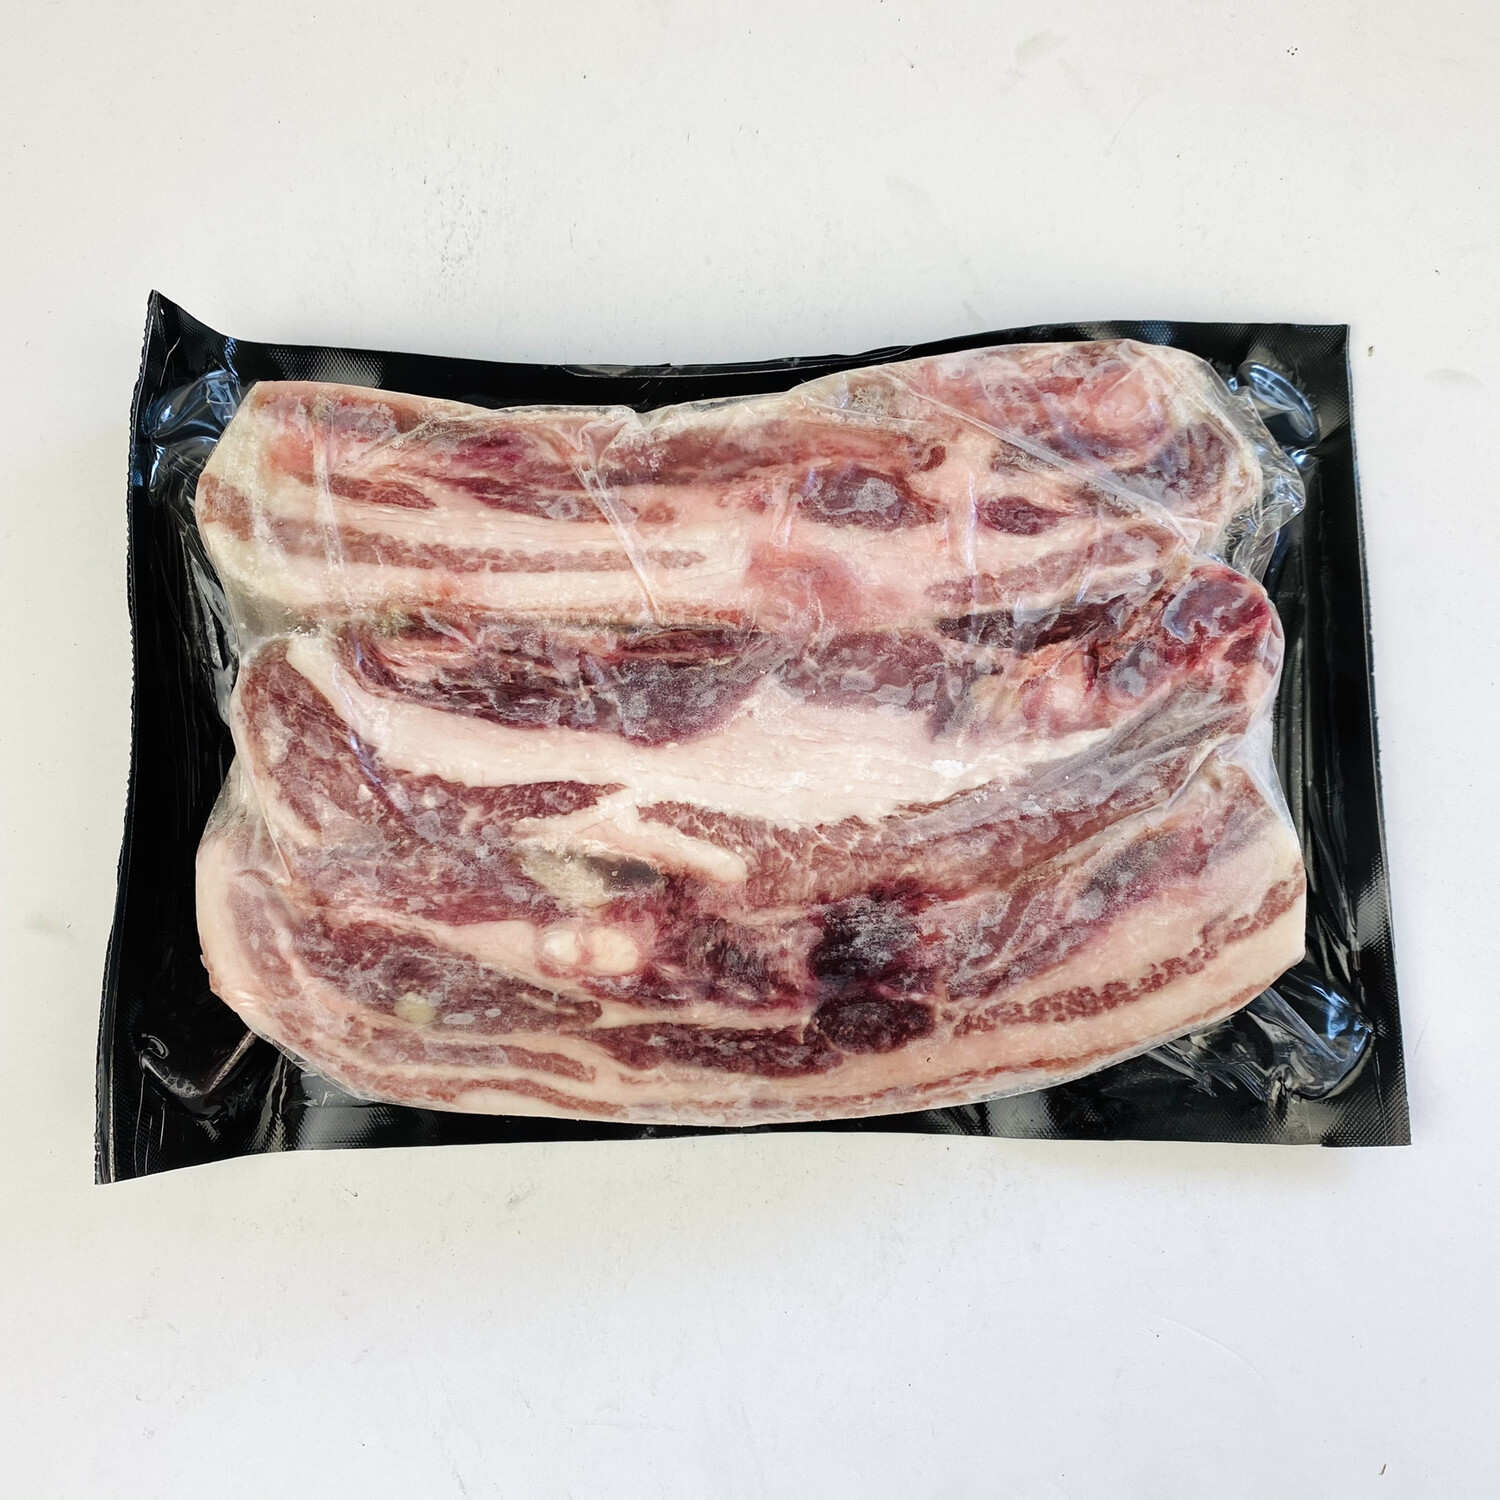 Berkshire Pork Belly Boneless Skinless 2.9-3.25lbs 黑毛猪去皮五花肉  $9.99/lb